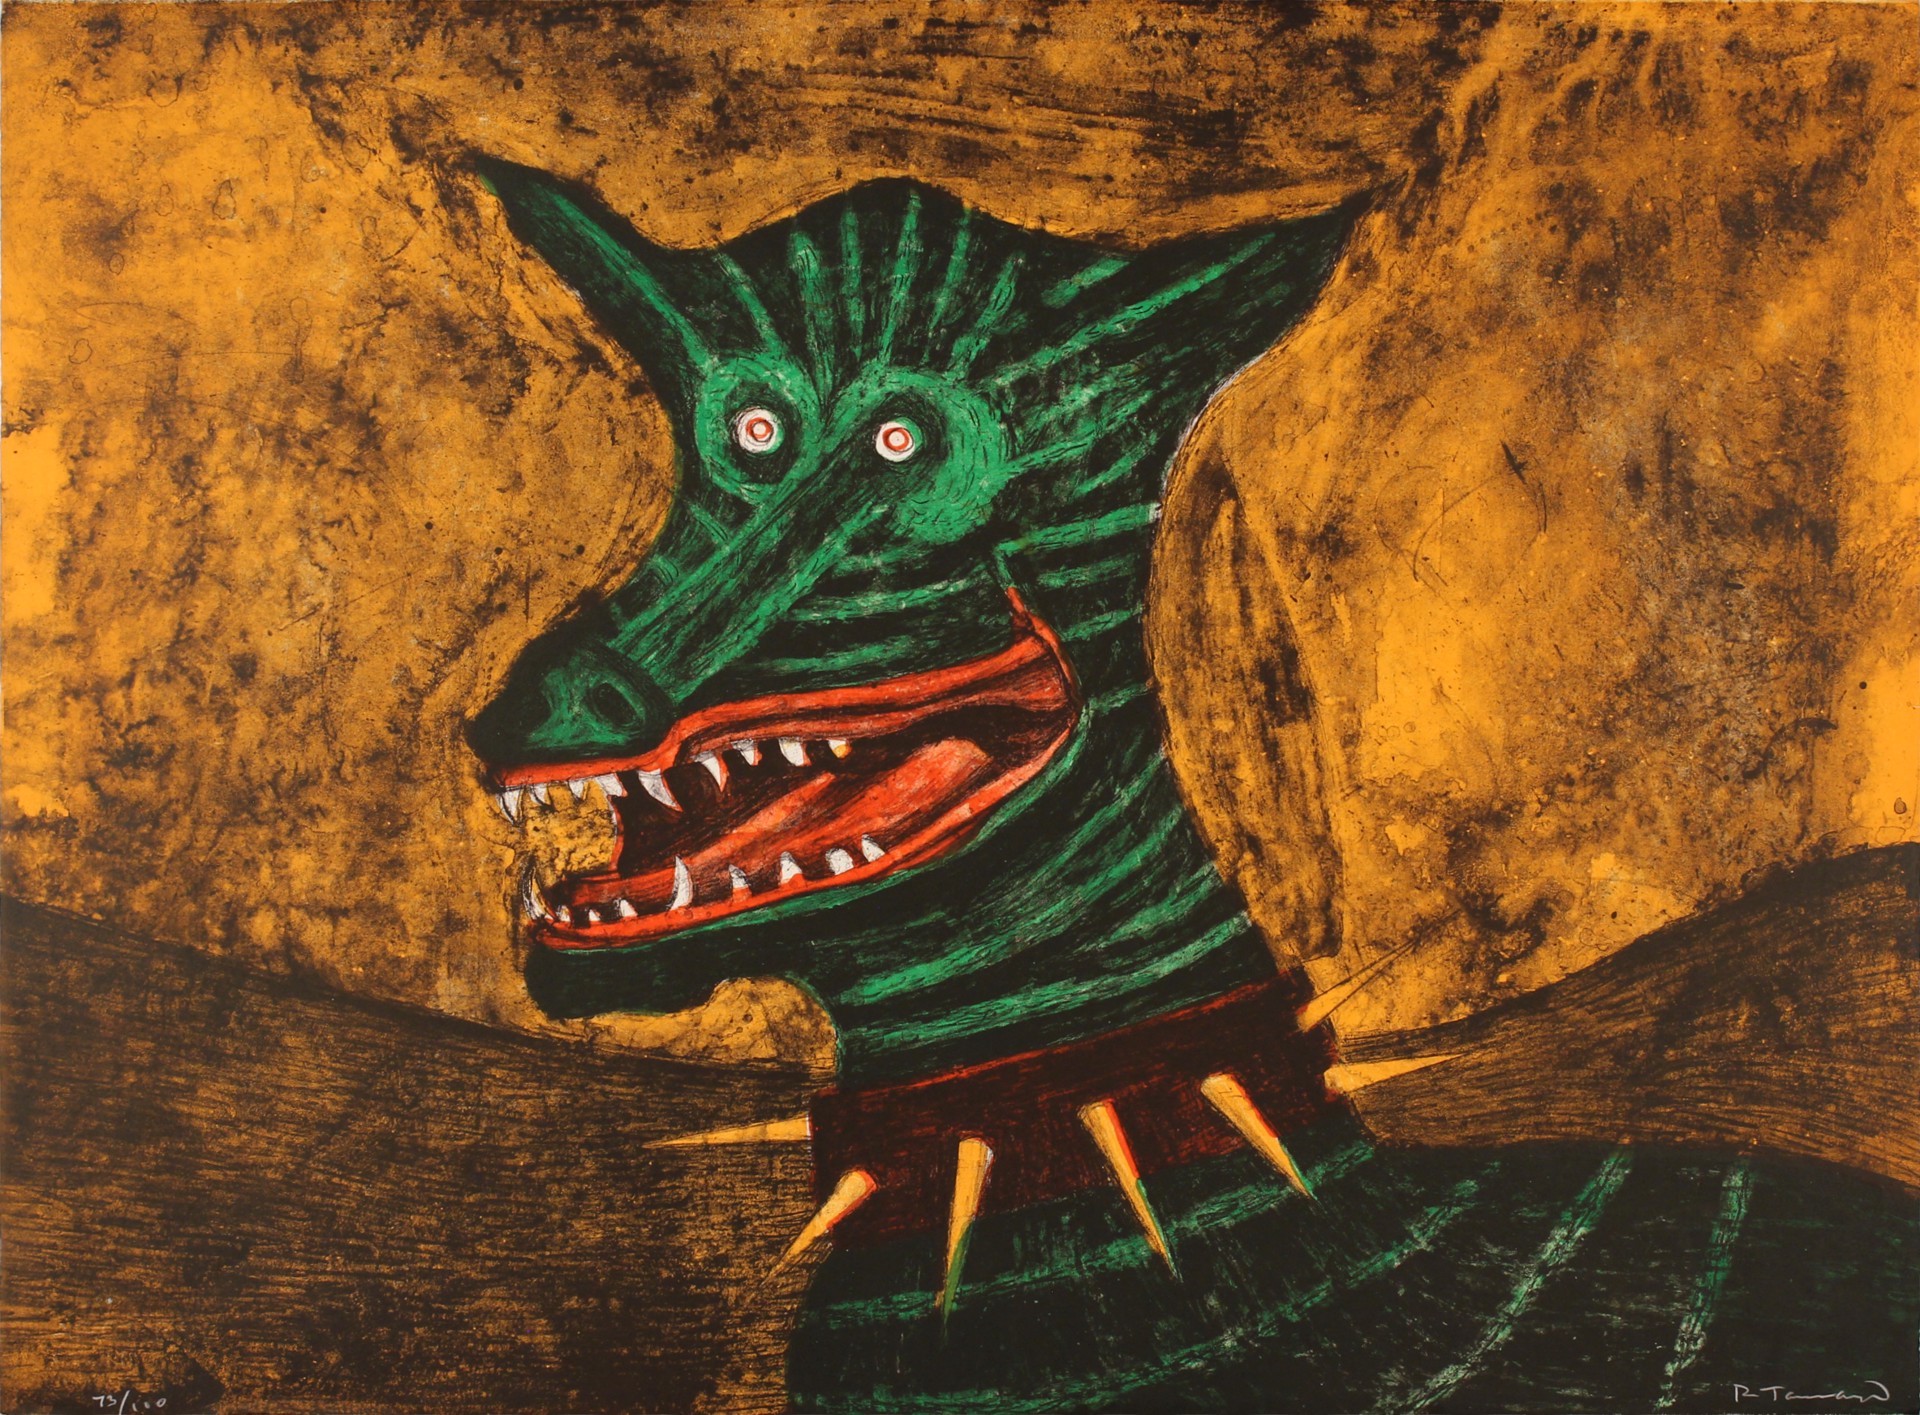 Chacal by Rufino Tamayo (1899 - 1991)